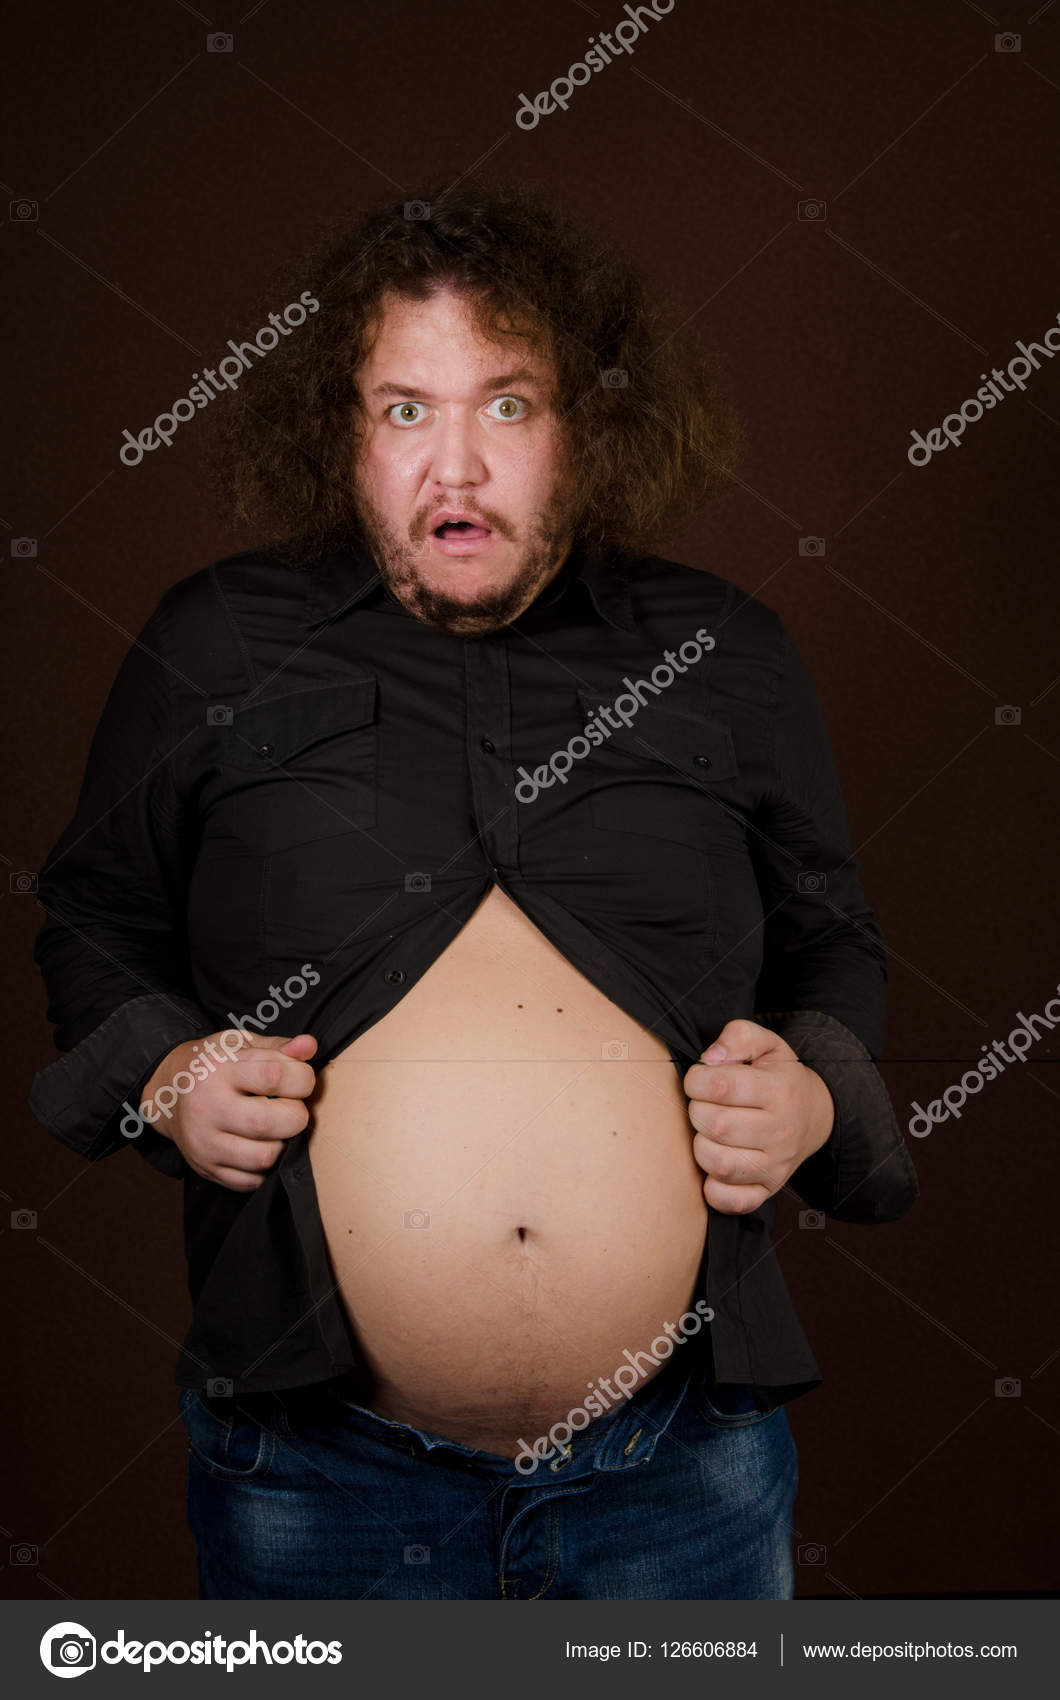 Funny pregnant man. Stock Photo by ©vladorlov 126606884